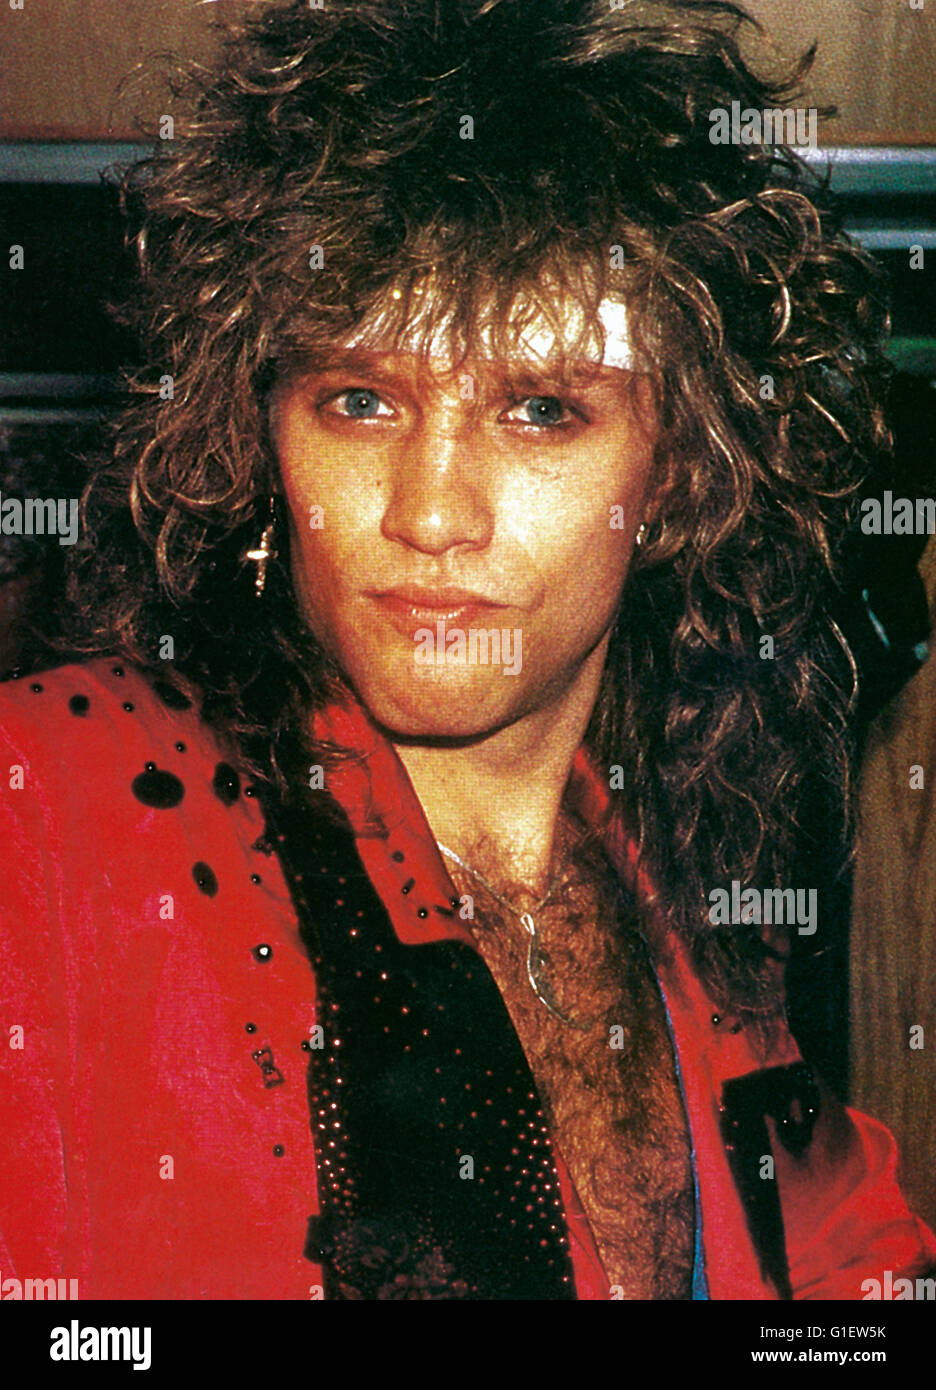 Der amerkanische Rocksänger, Komponist und Gitarrist Jon Bon Jovi, 1990er Jahre. Rock americano cantante, compositore e chitarrista Jon Bon Jovi, 1990s. Foto Stock